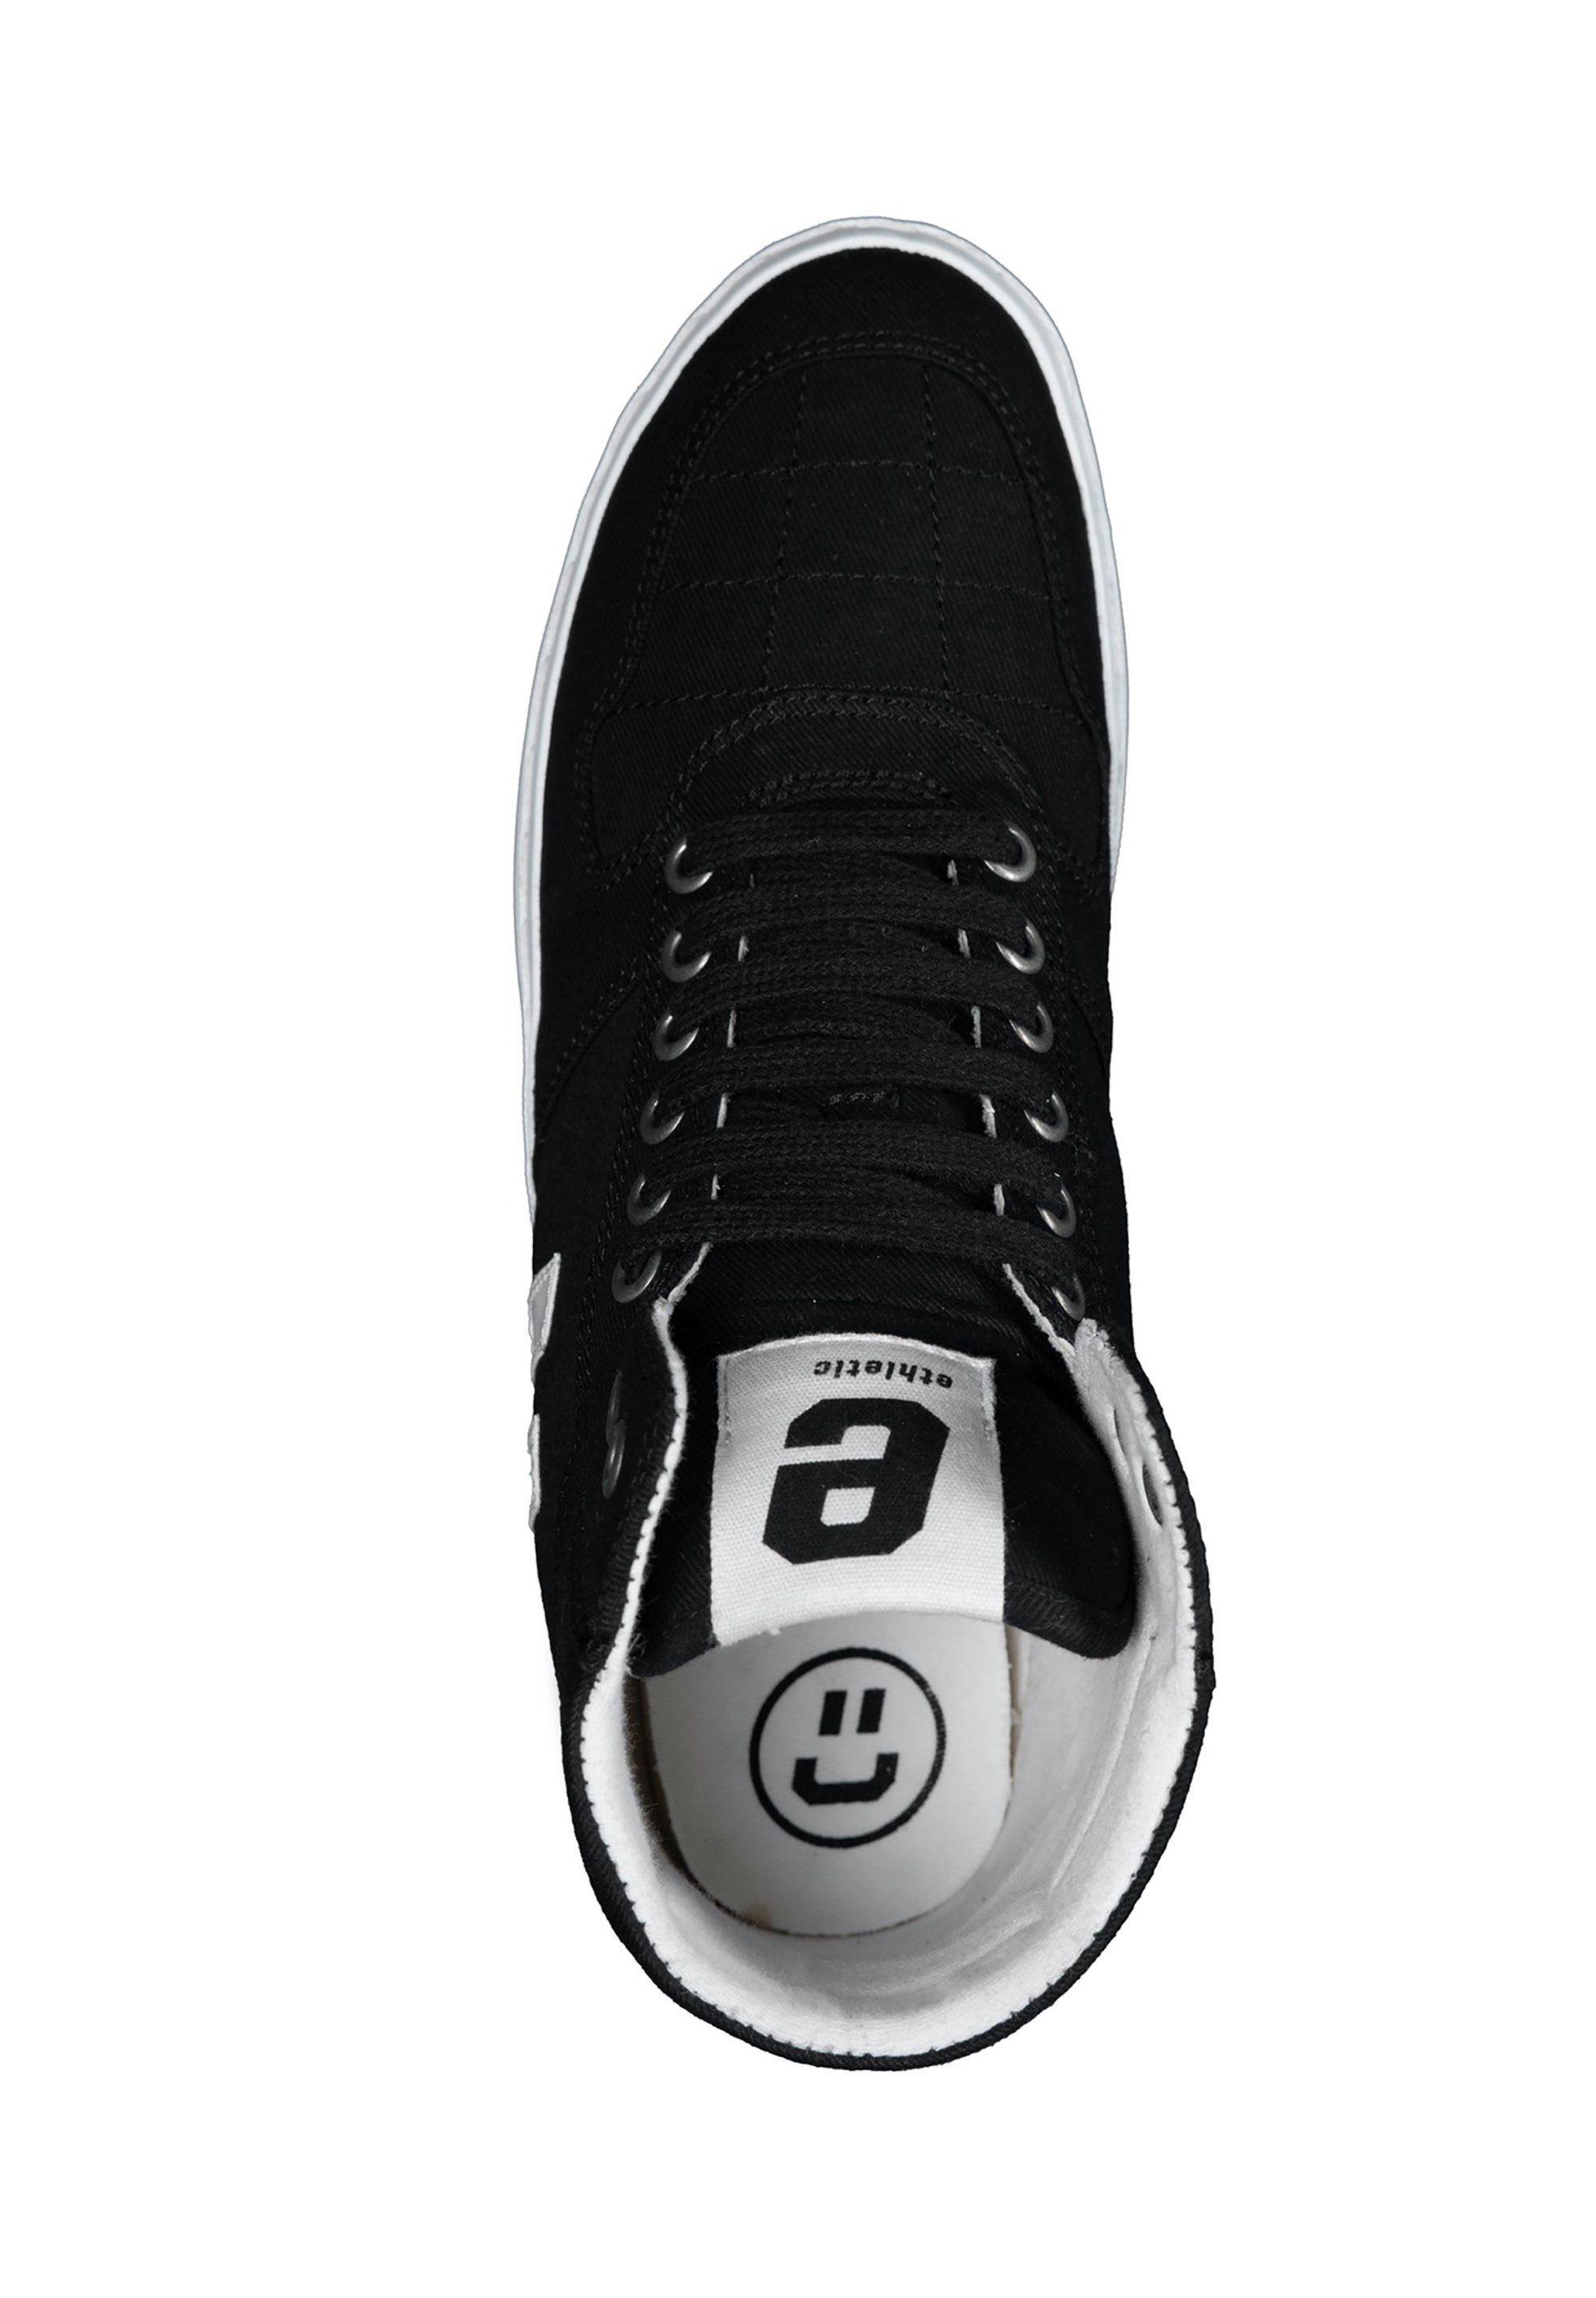 ETHLETIC Hiro II Fairtrade jet Sneaker Produkt black